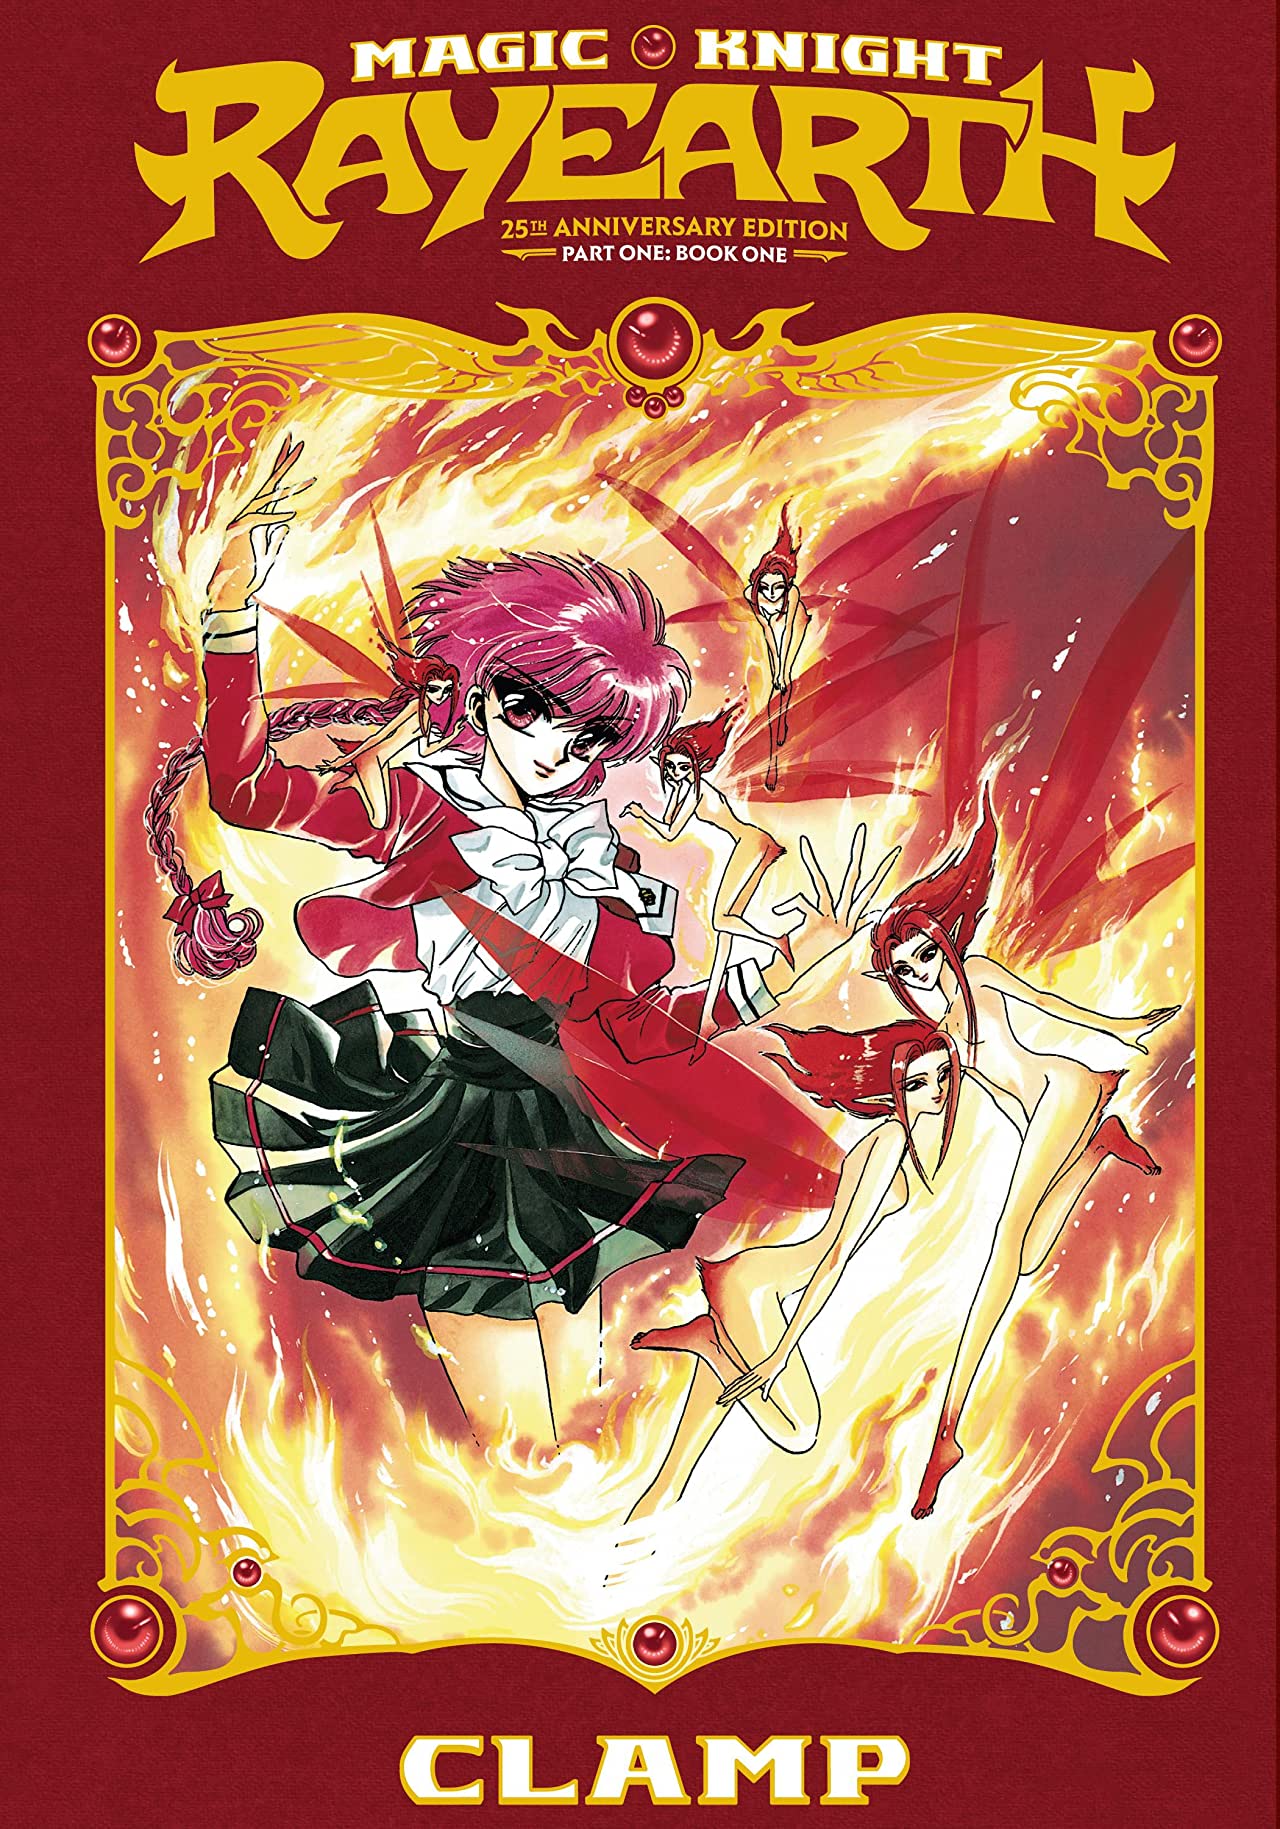 Manga Volume 6, Knight's & Magic Wiki